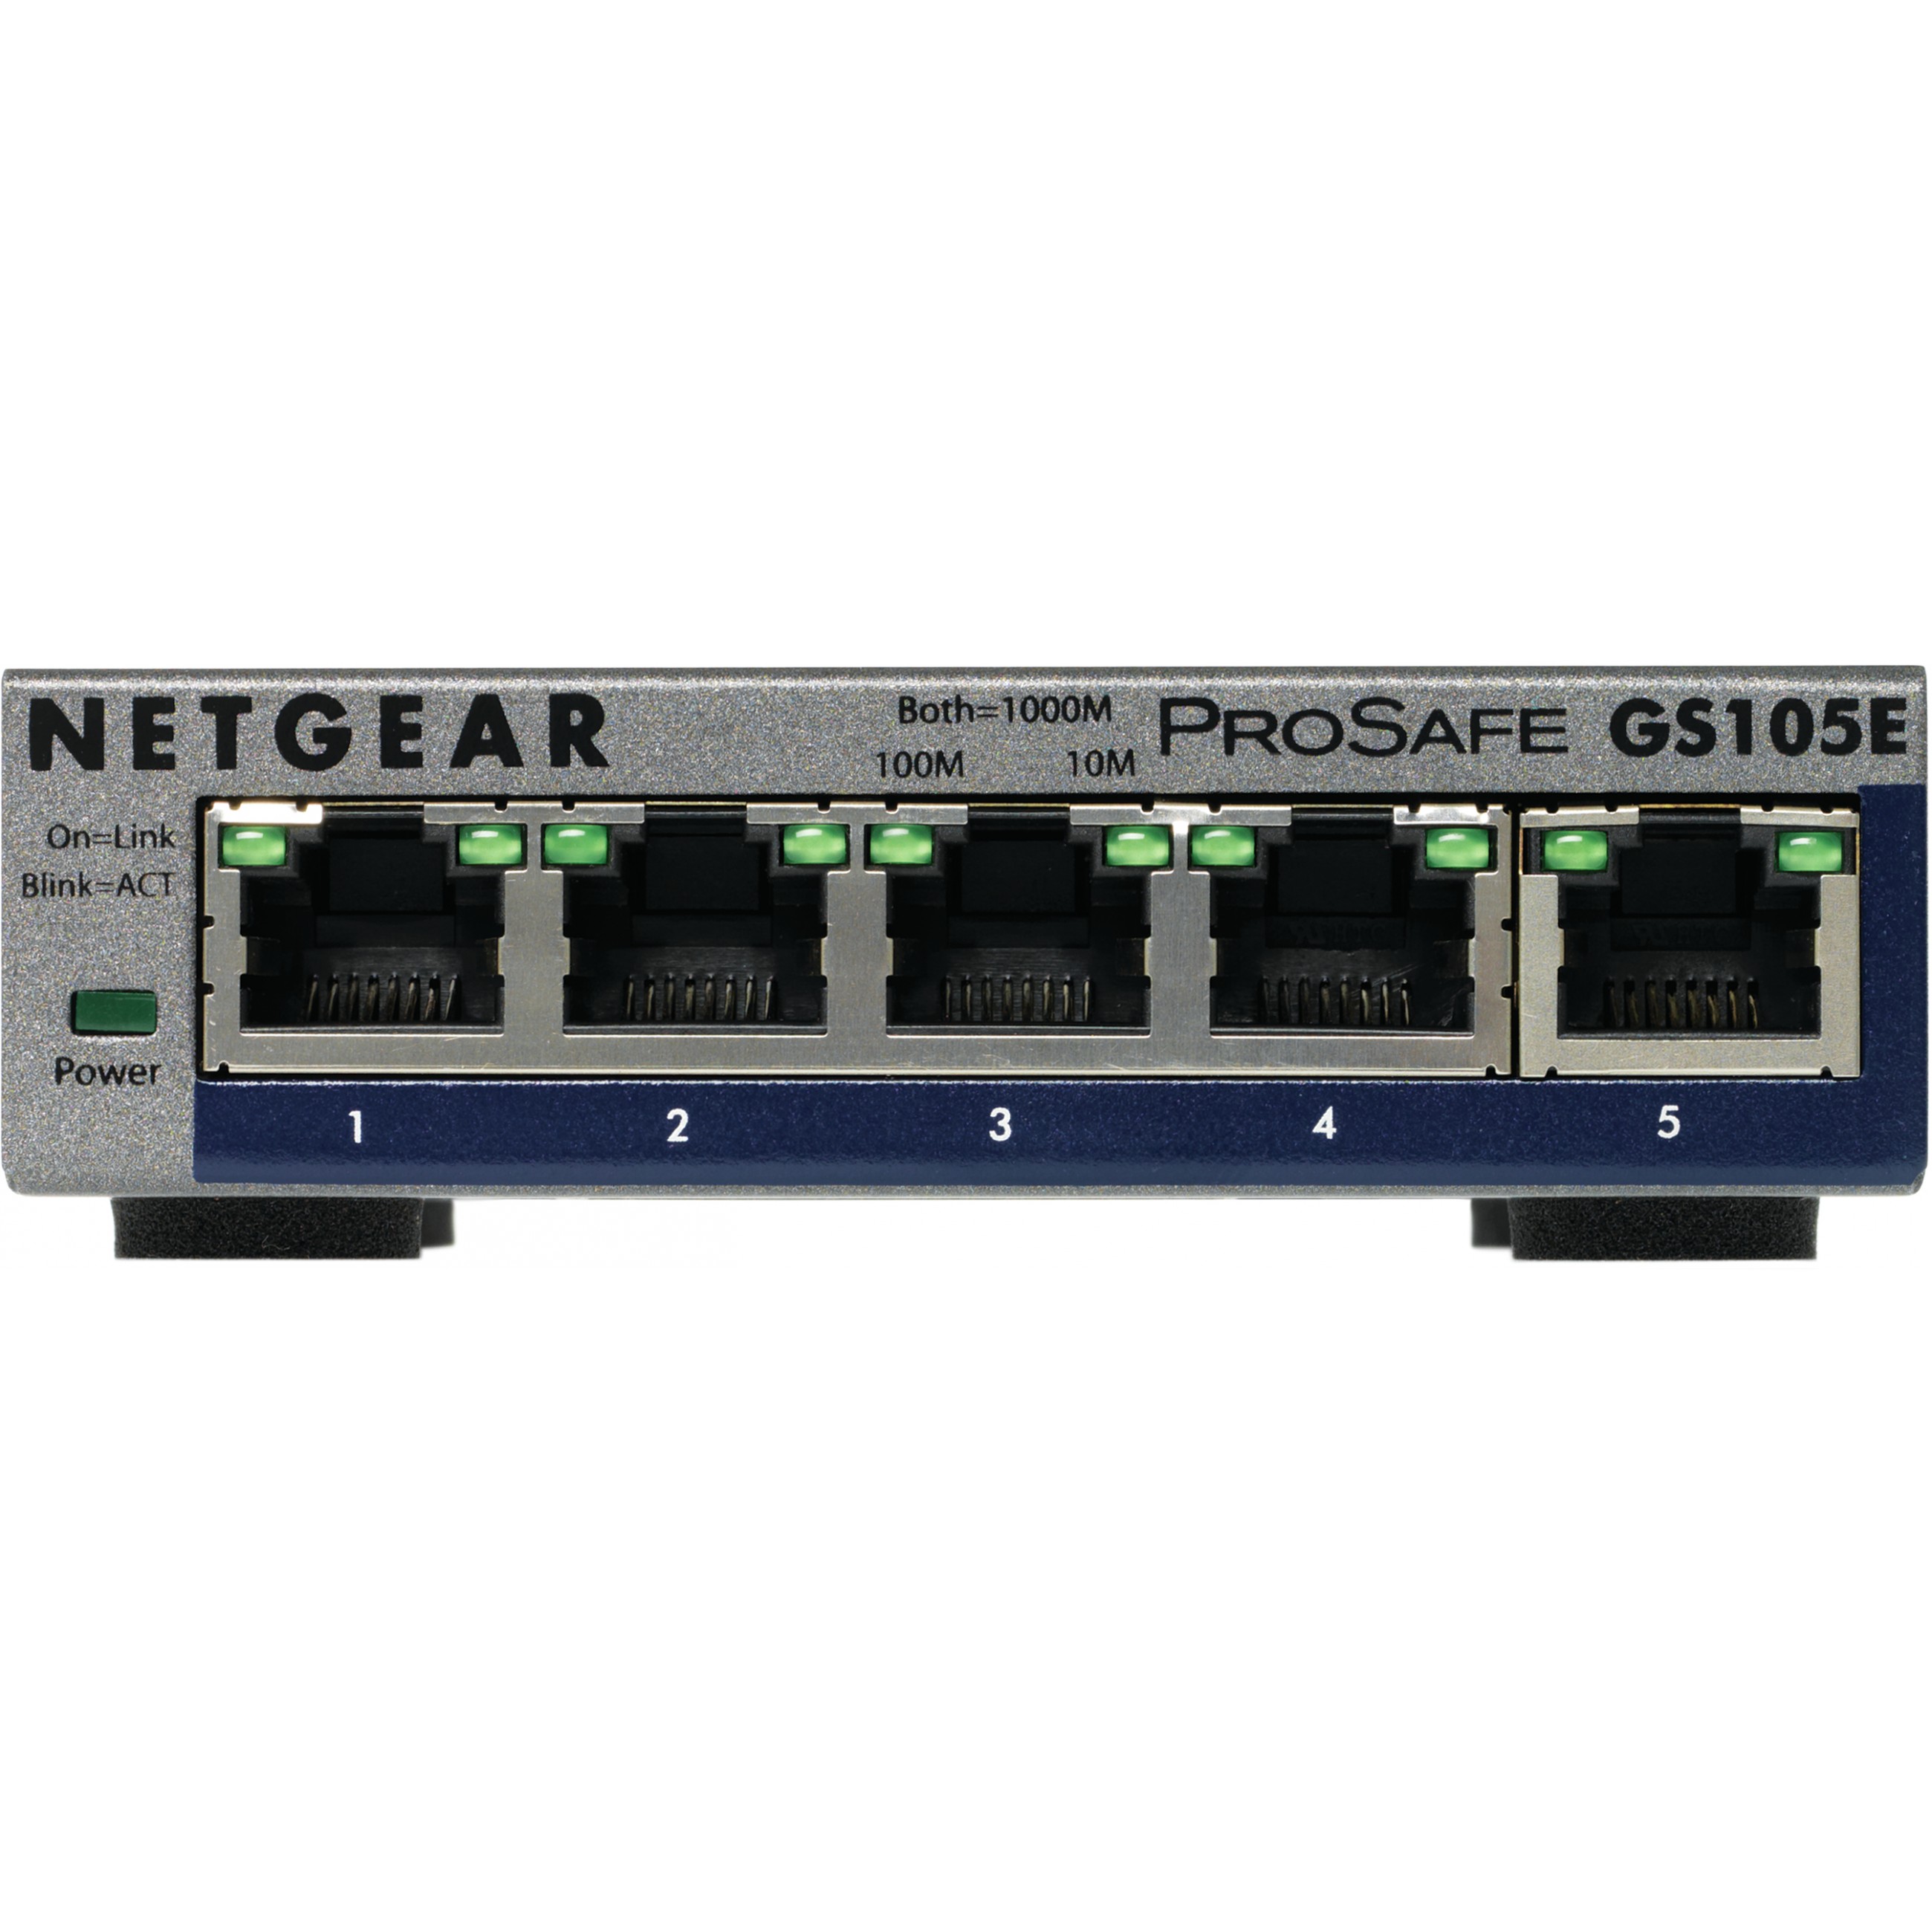 NETGEAR GS105E-200PES network switch - GS105E-200PES